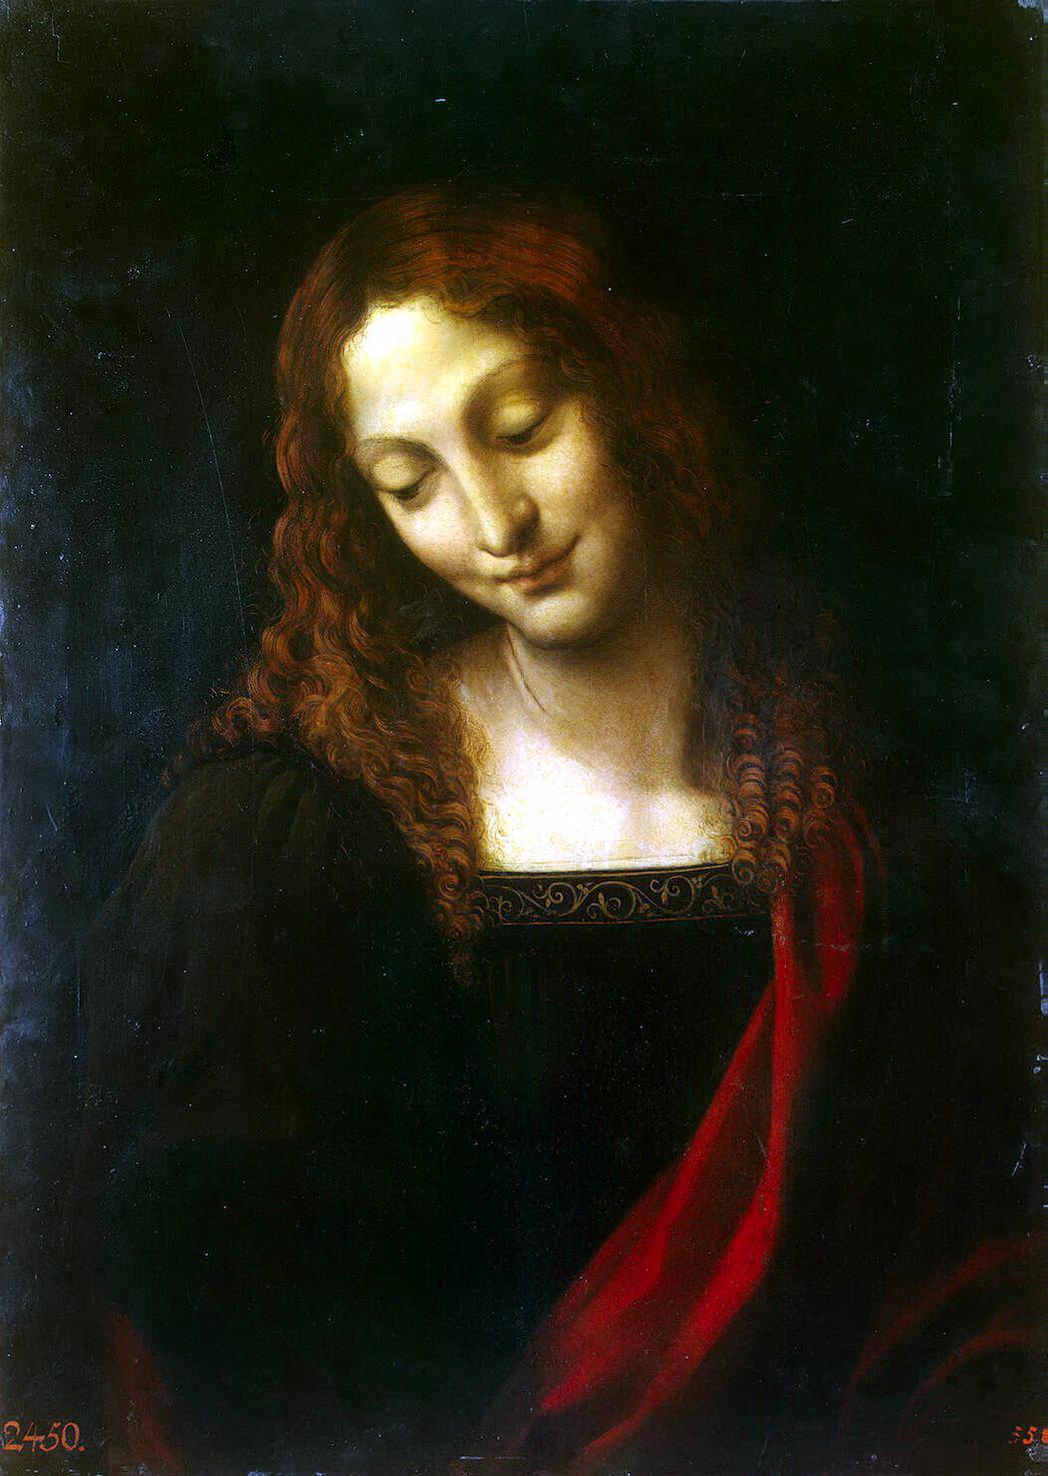 Leonardo da vinci painting photo